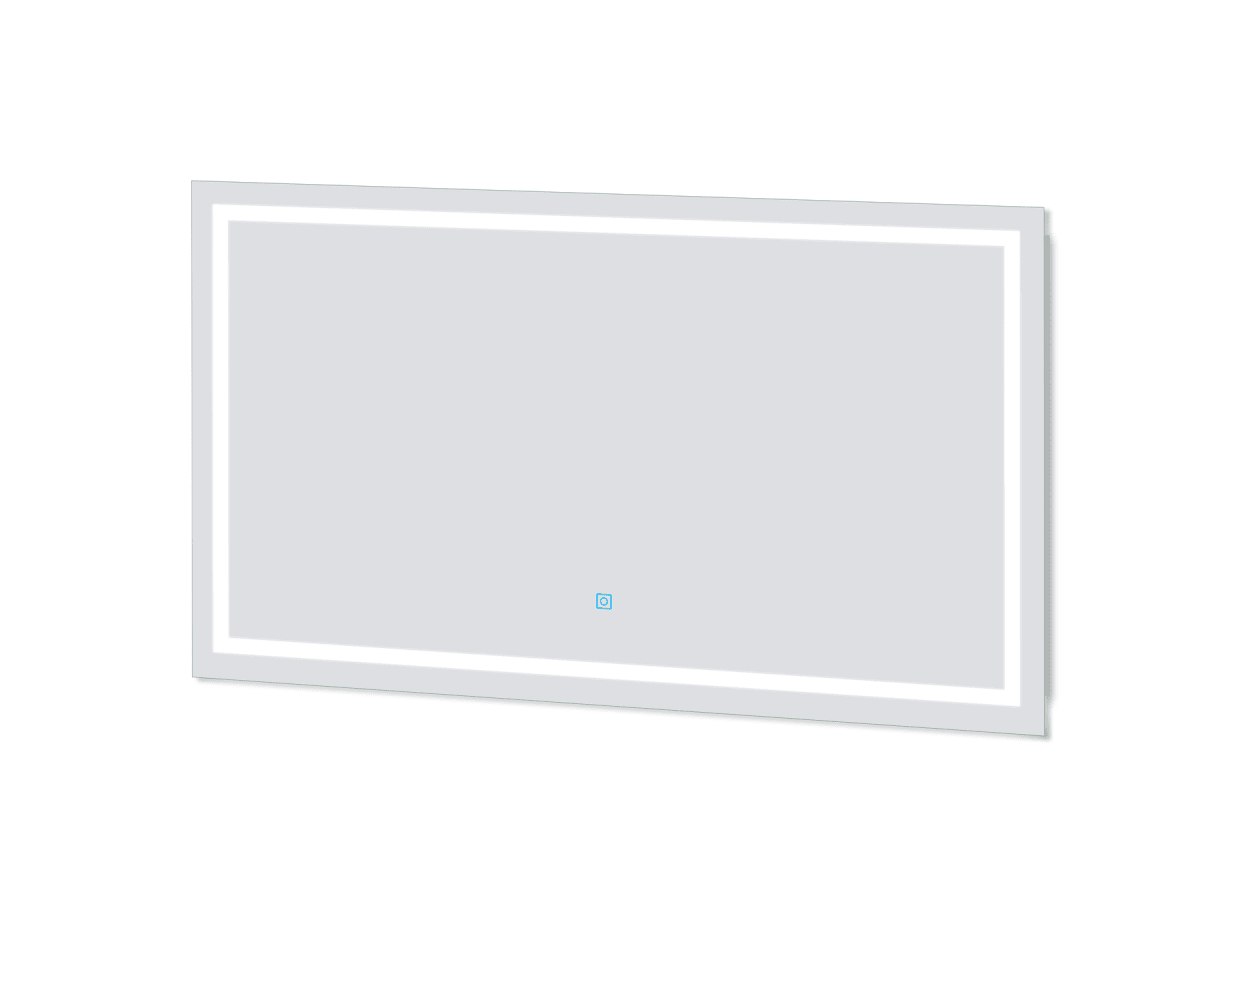 Espejo baño rectangular con led 120 x 70 cm, 2 botón tátil, antivaho